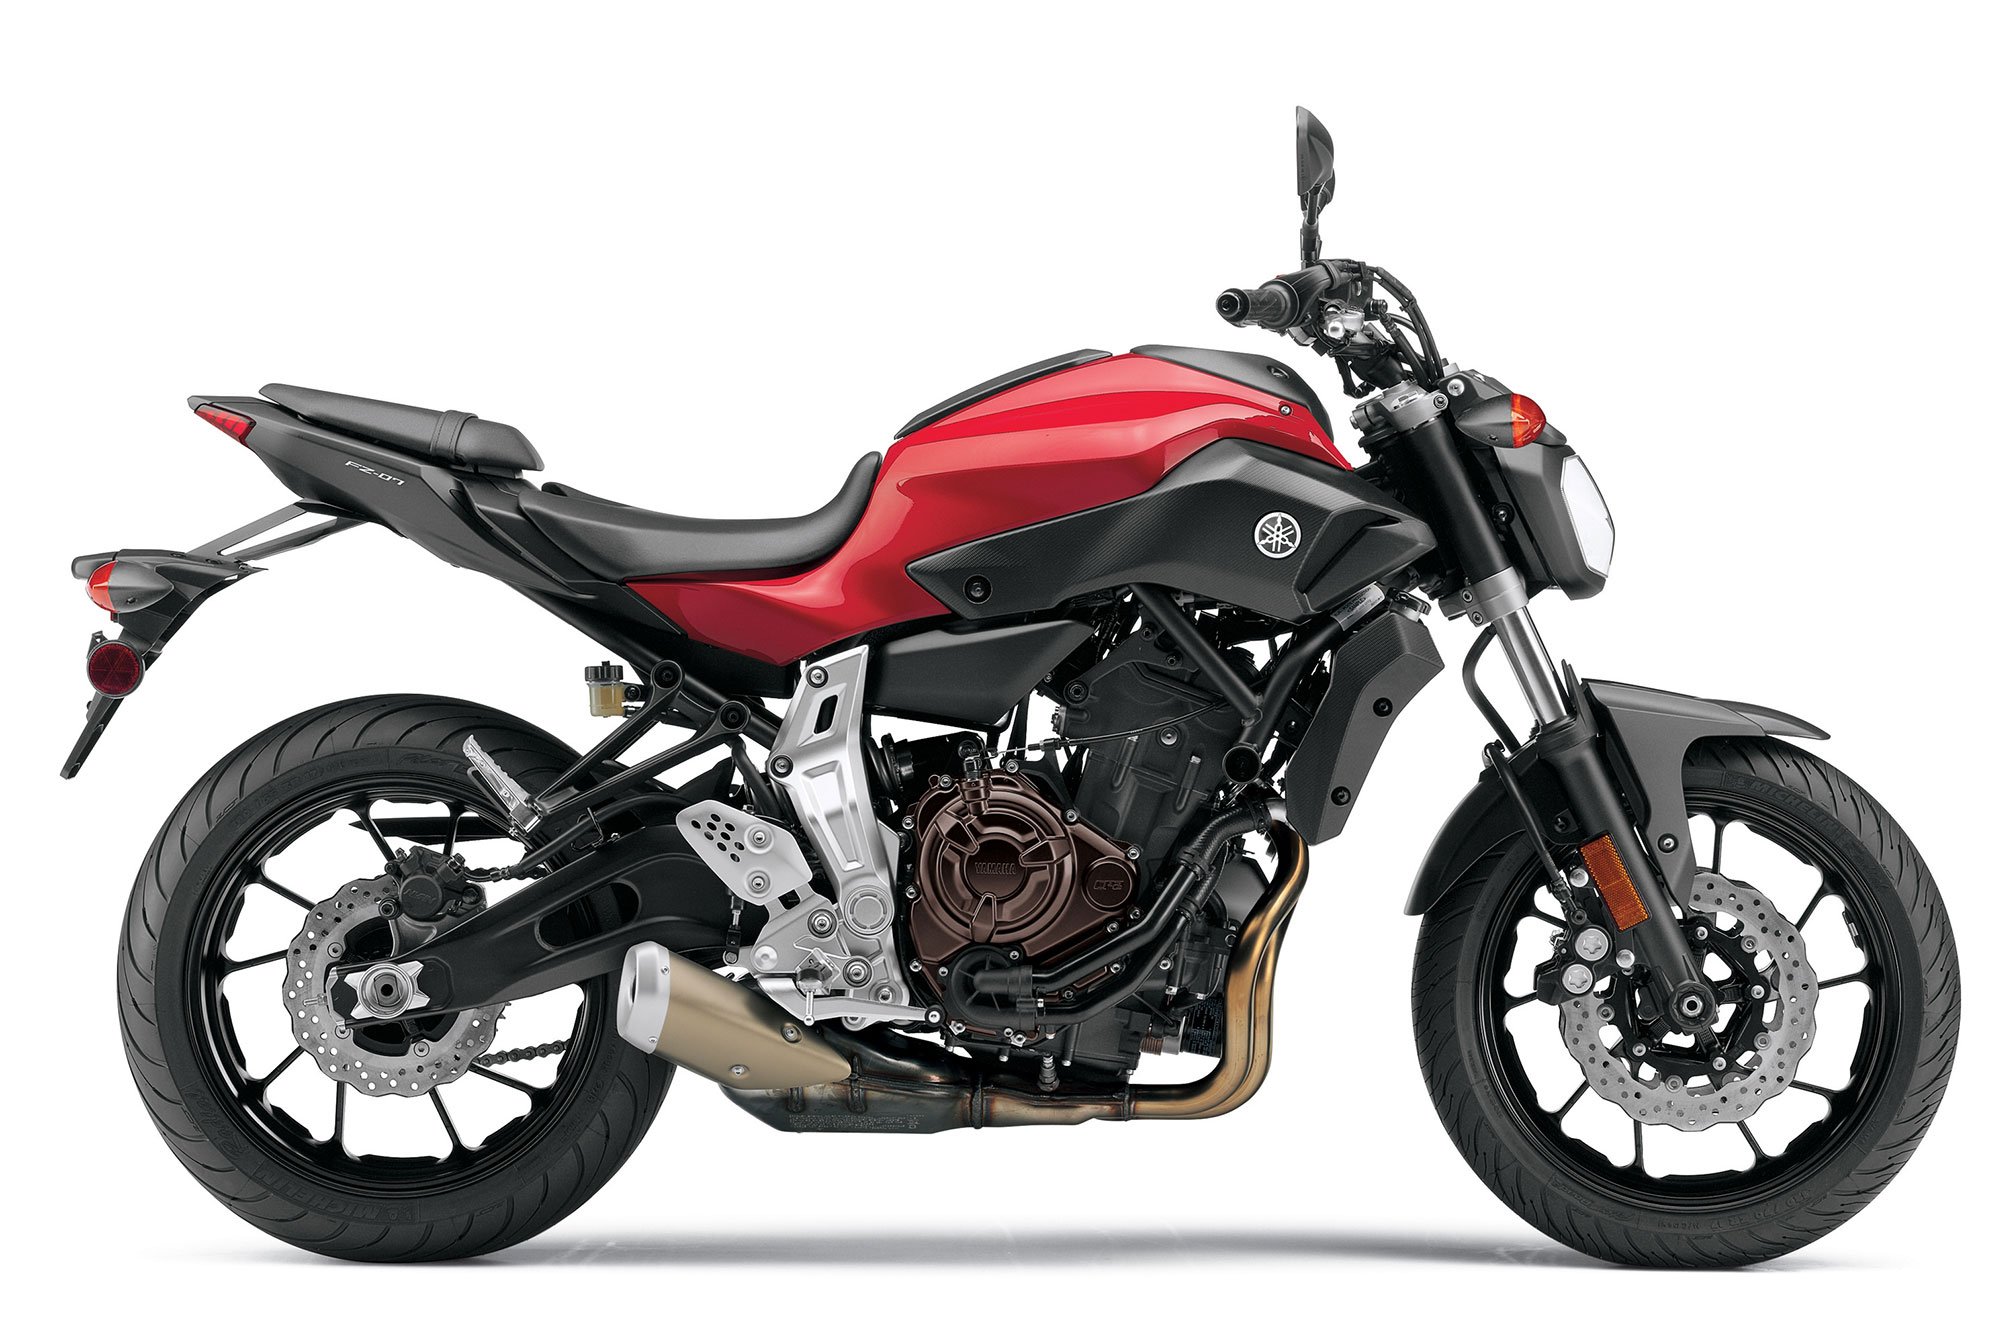 2015 Yamaha FZ-07 First Ride Review